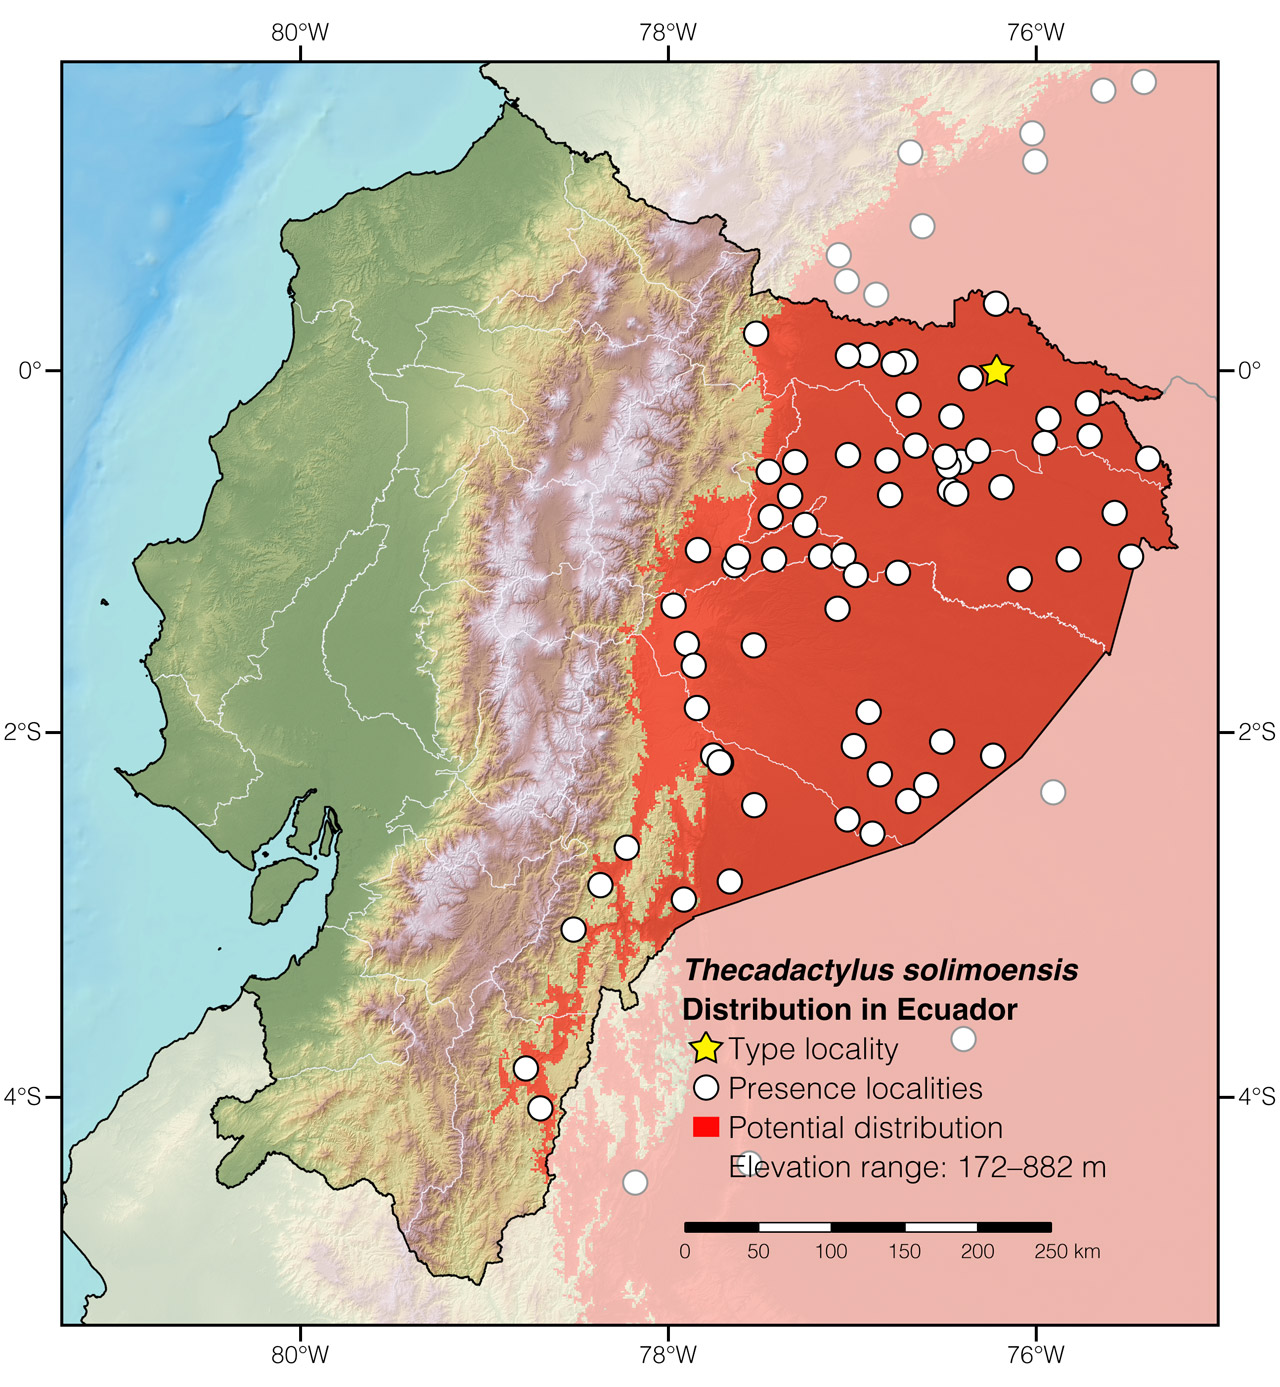 Distribution of Thecadactylus solimoensis in Ecuador